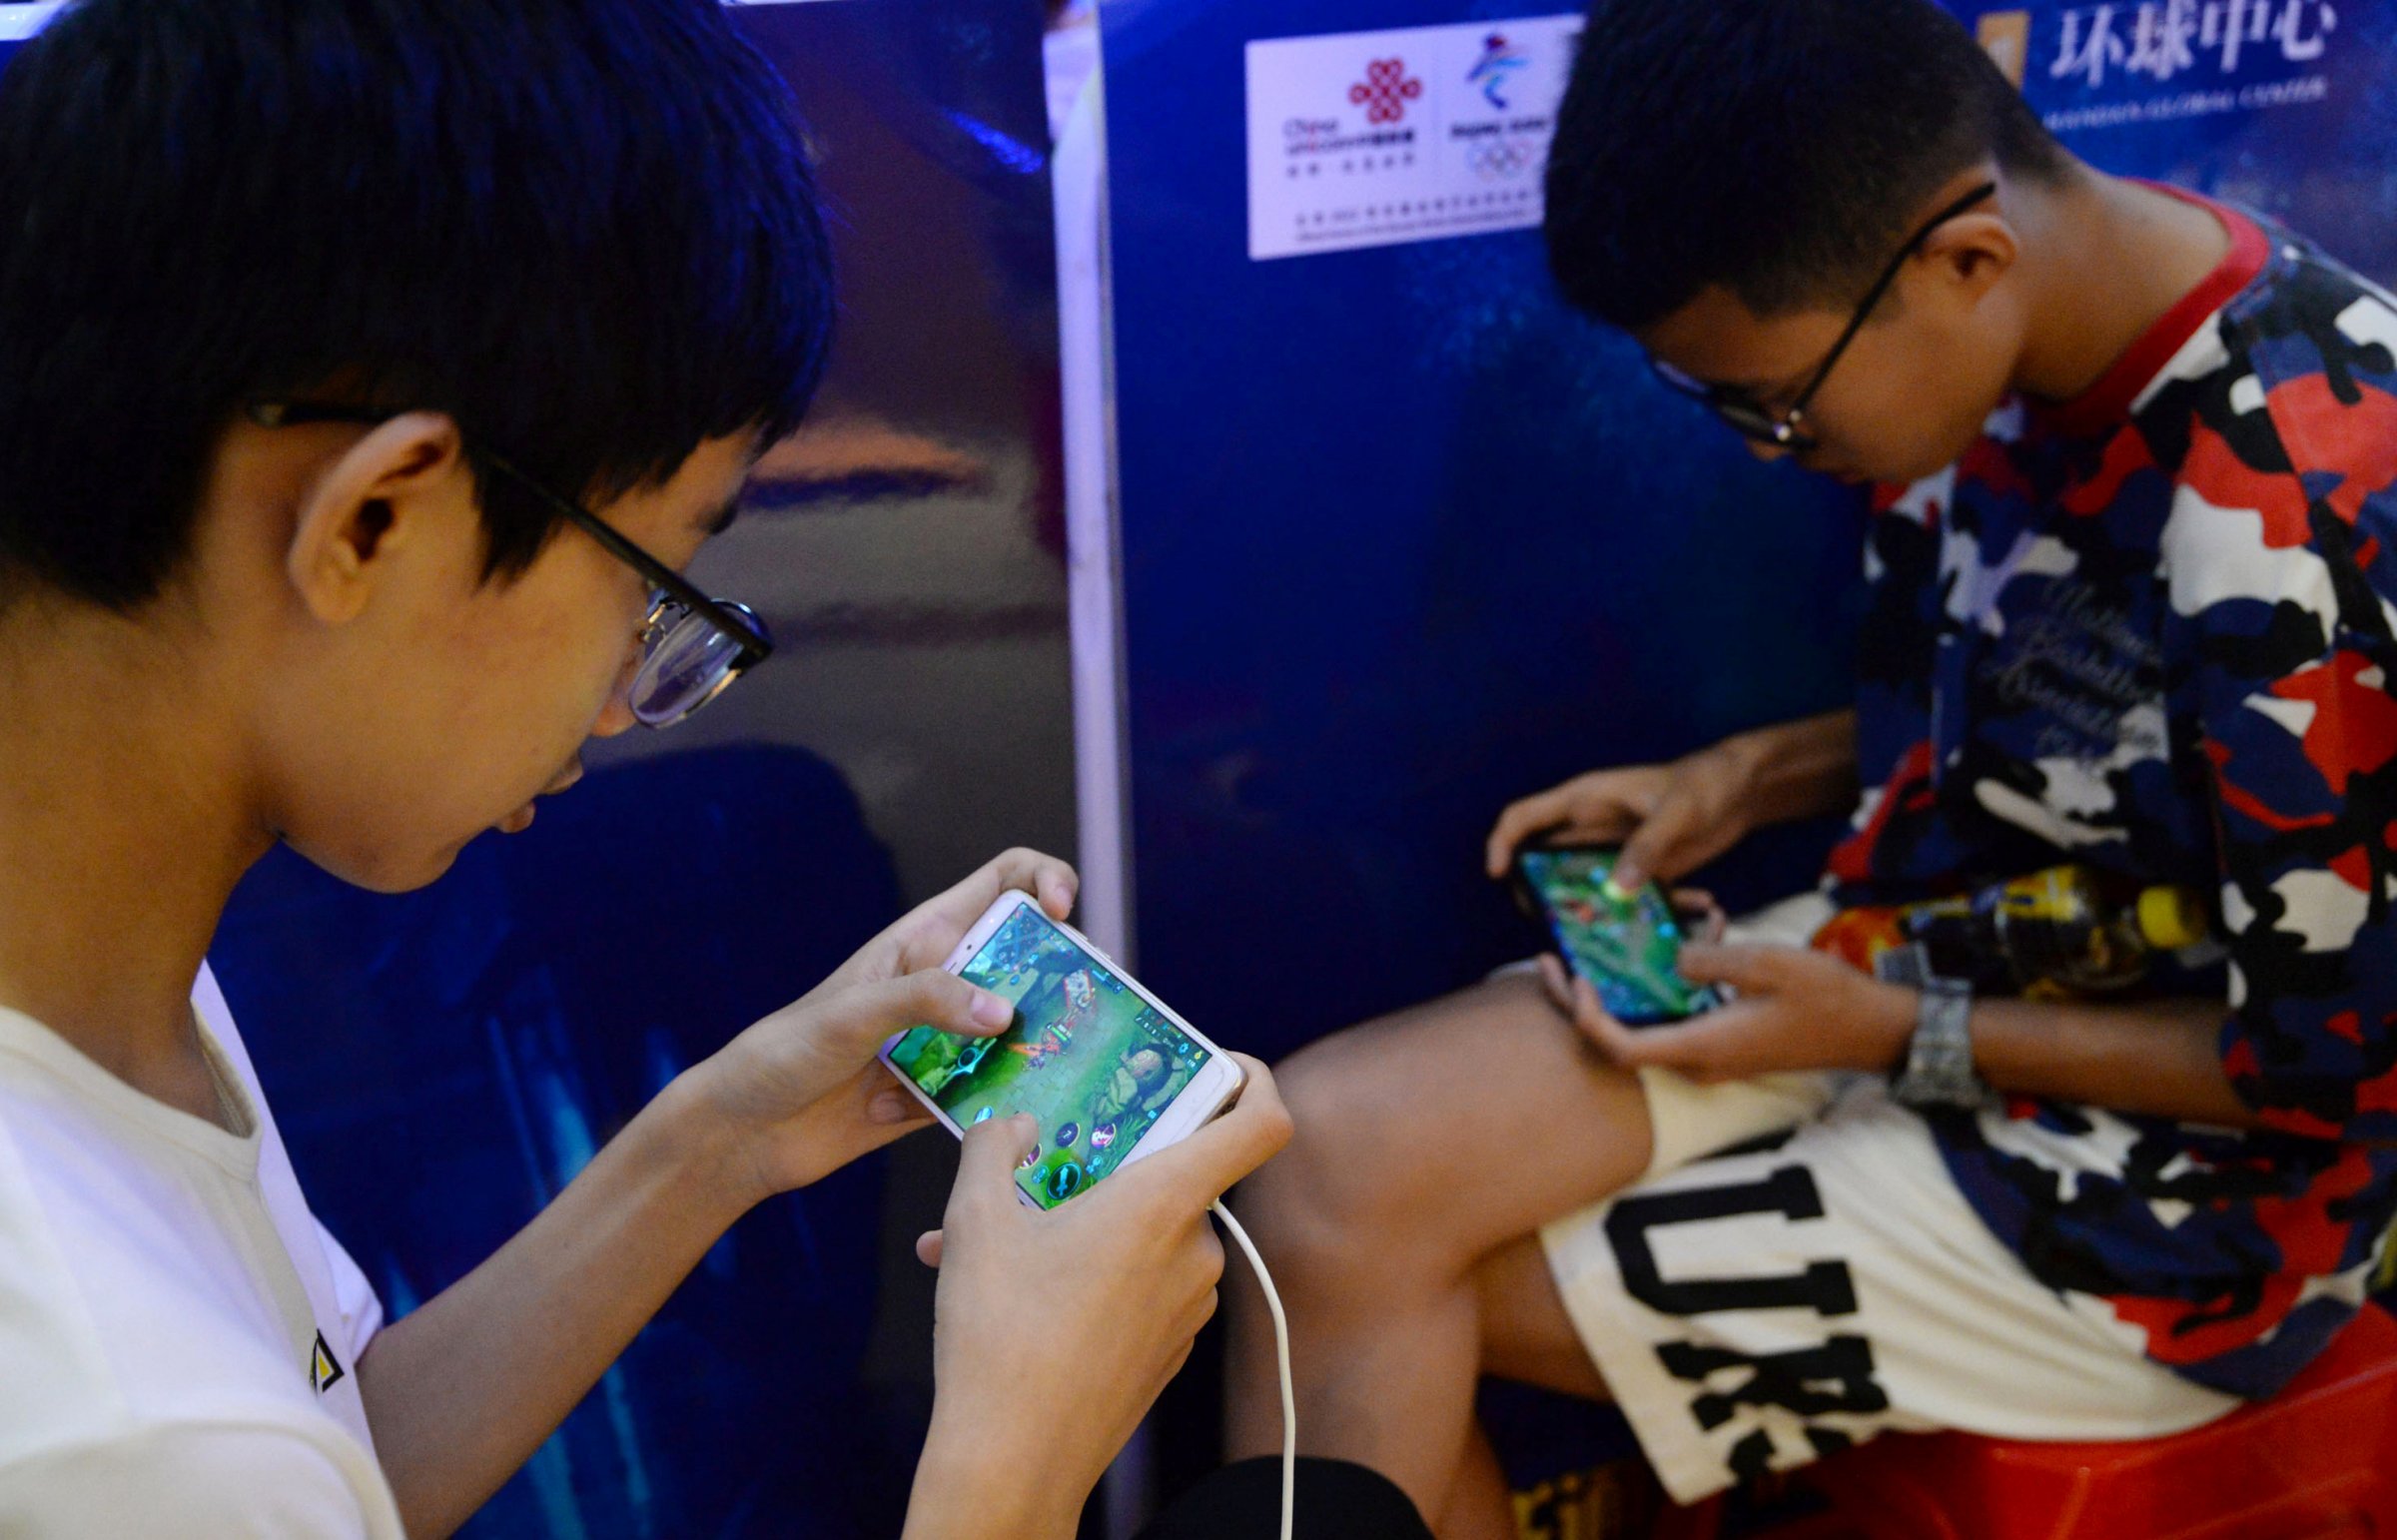 China mobile games addiction